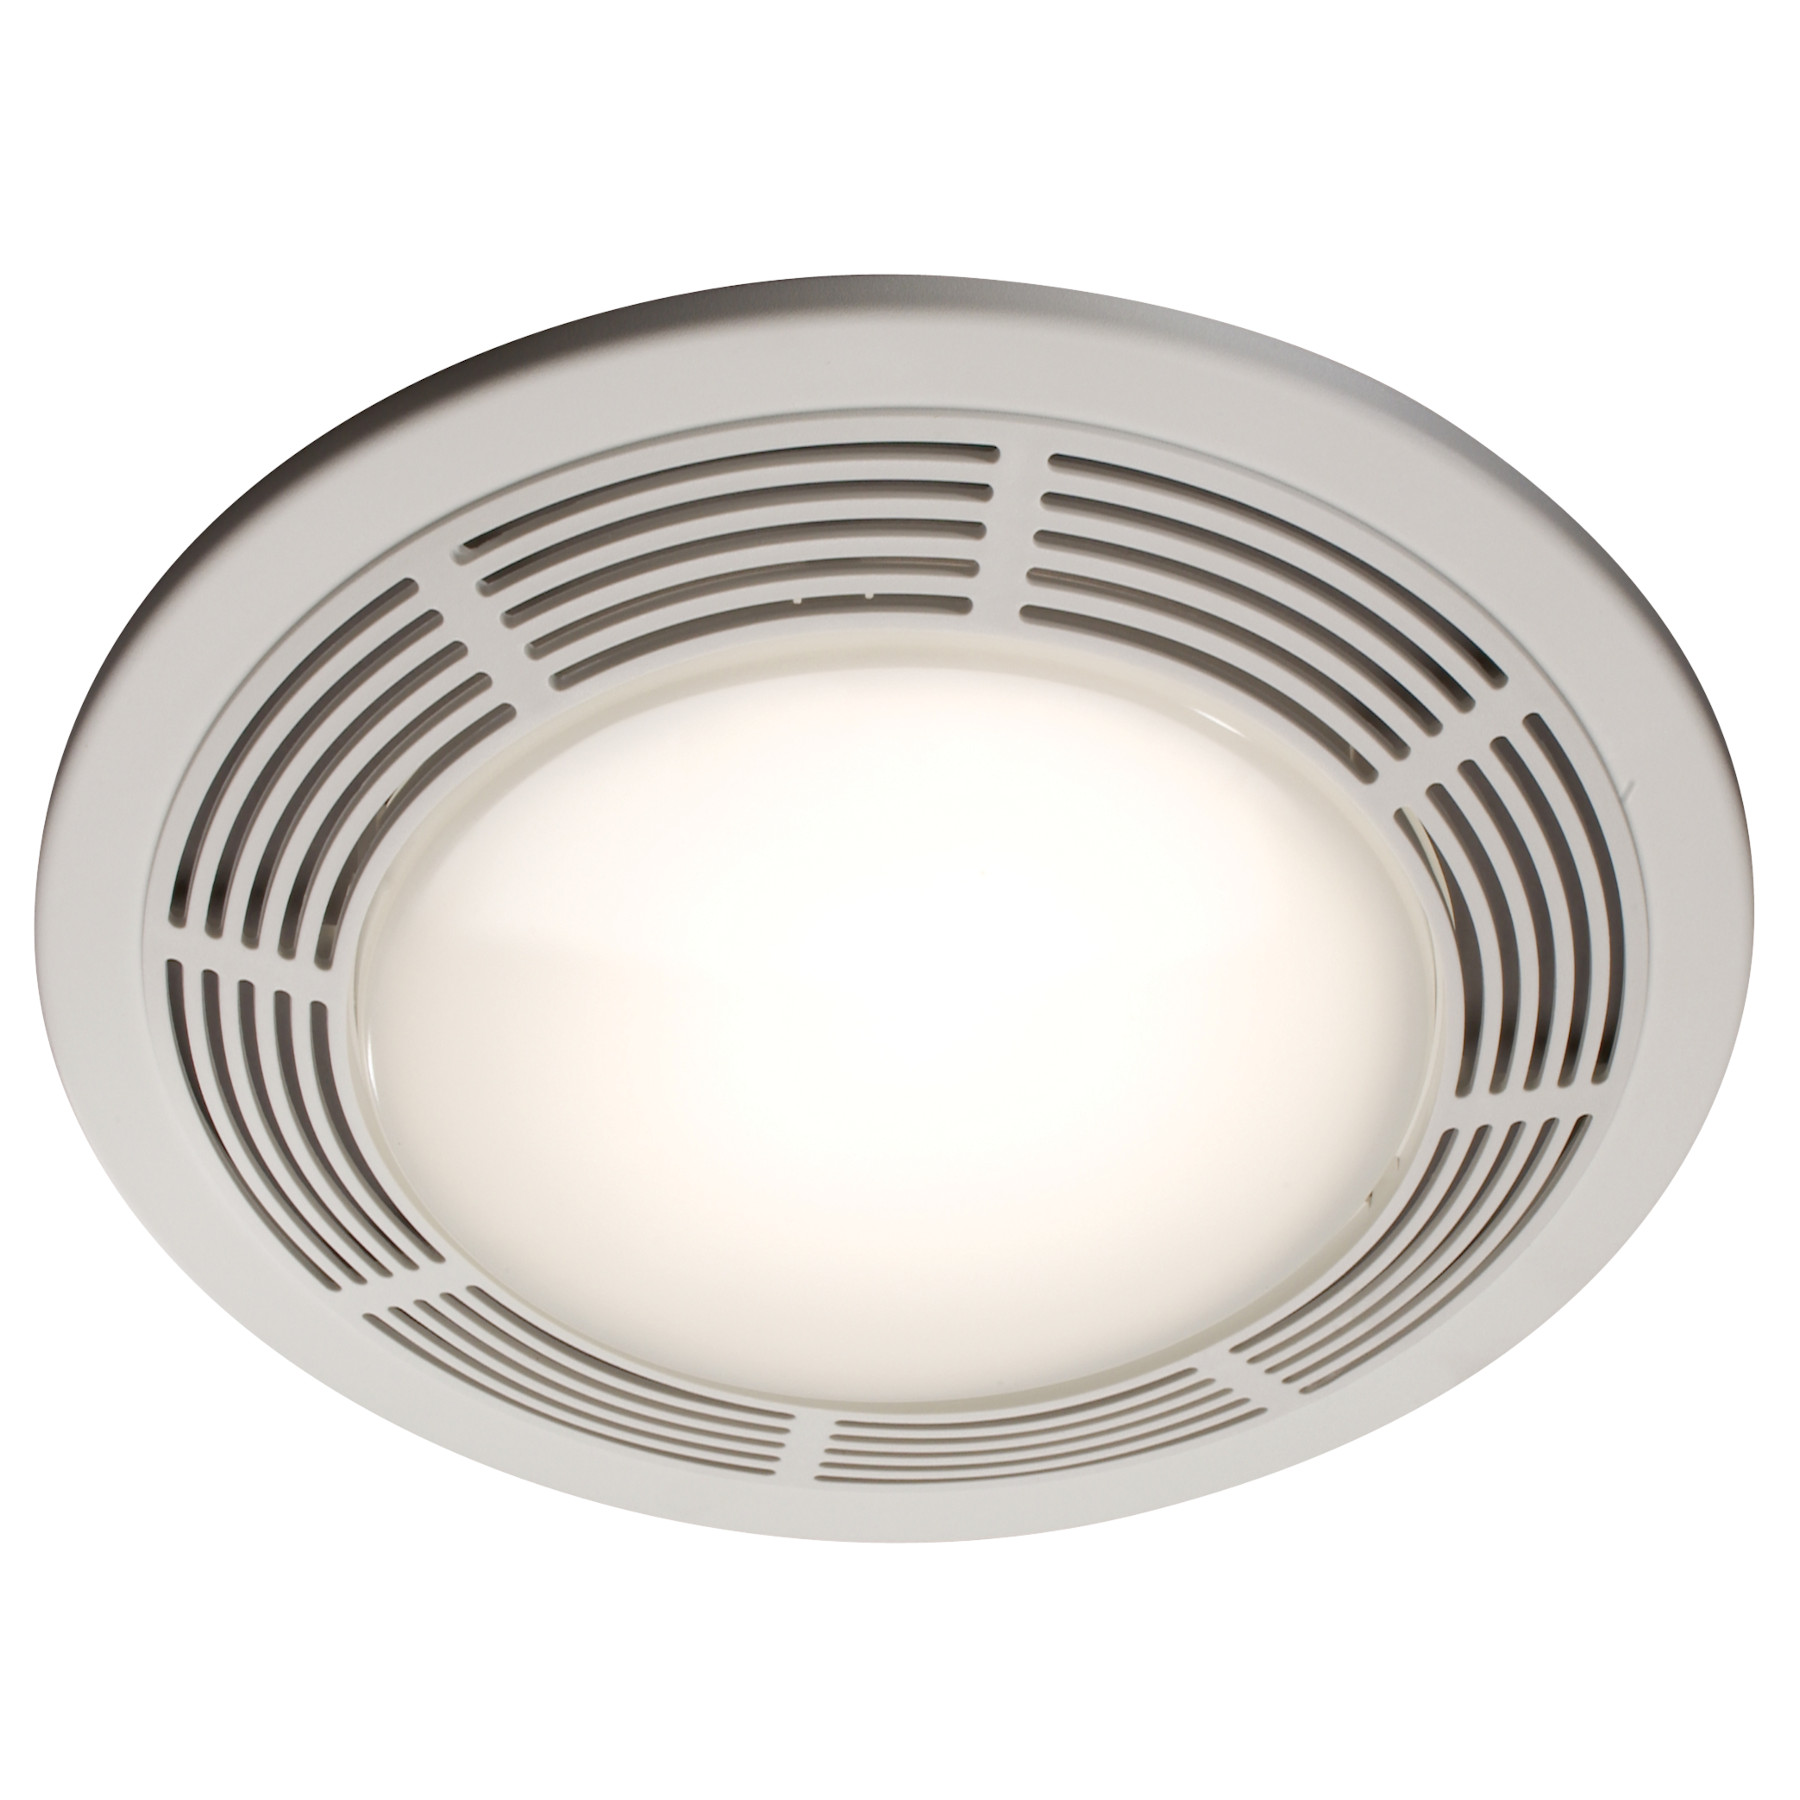 100 Cfm Bathroom Exhaust Fan, How To Install Broan Nutone Bathroom Fan With Light